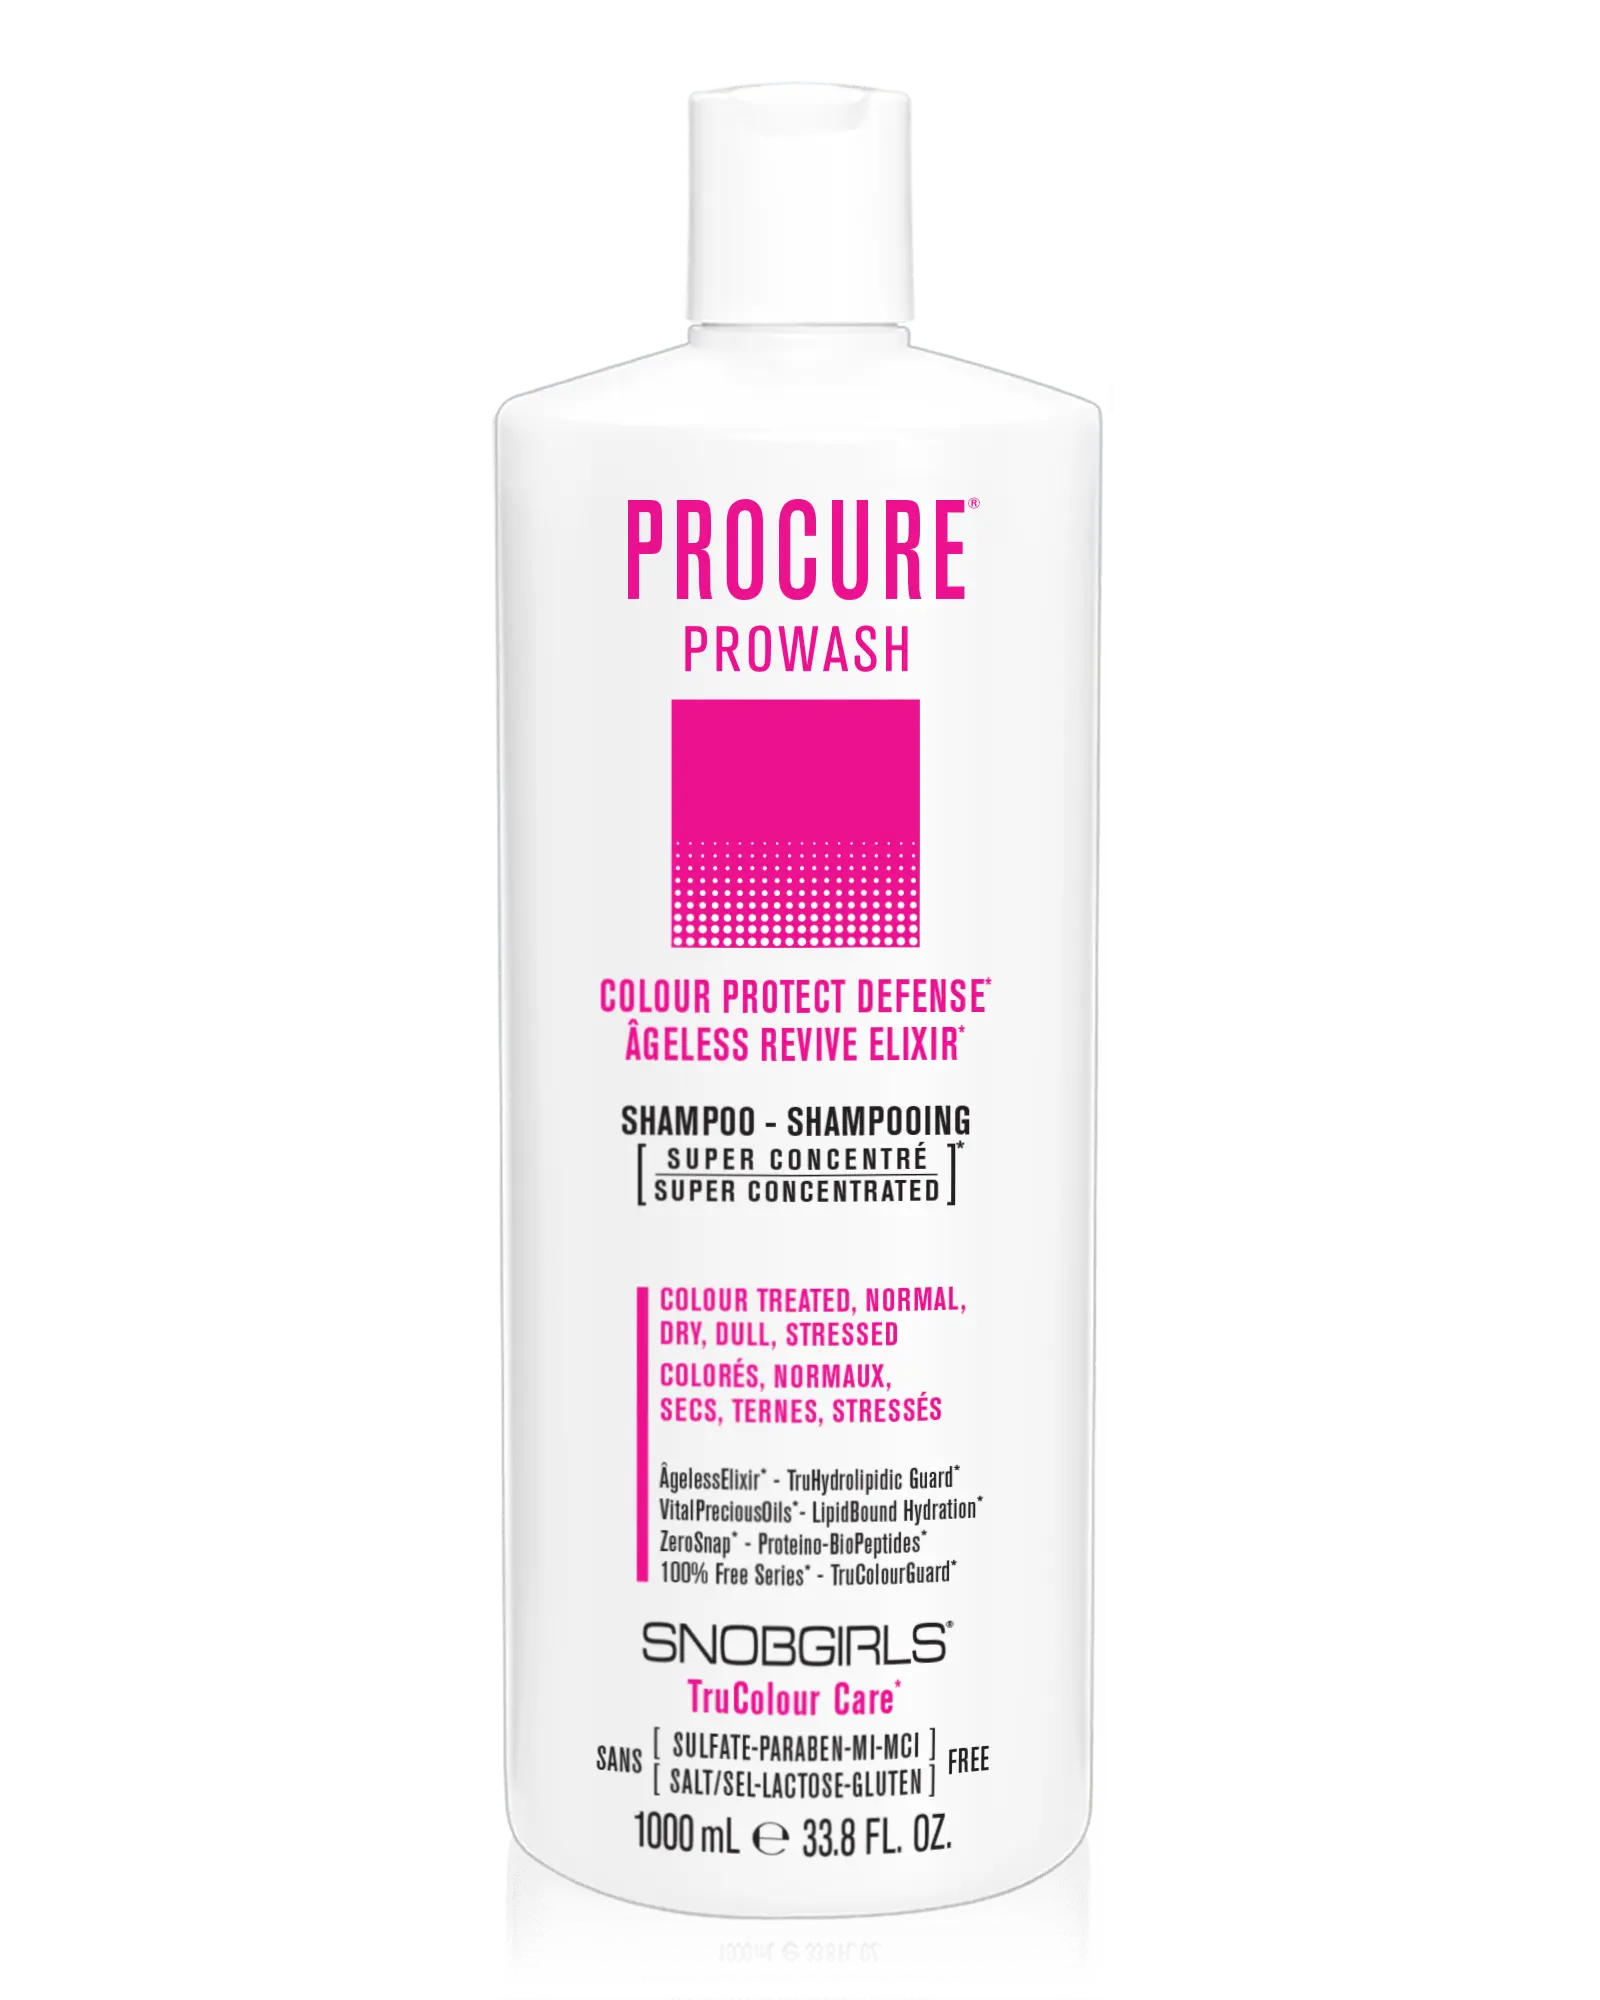 PROCURE Prowash (shampoo) 33.8 FL. OZ. - SNOBGIRLS.com